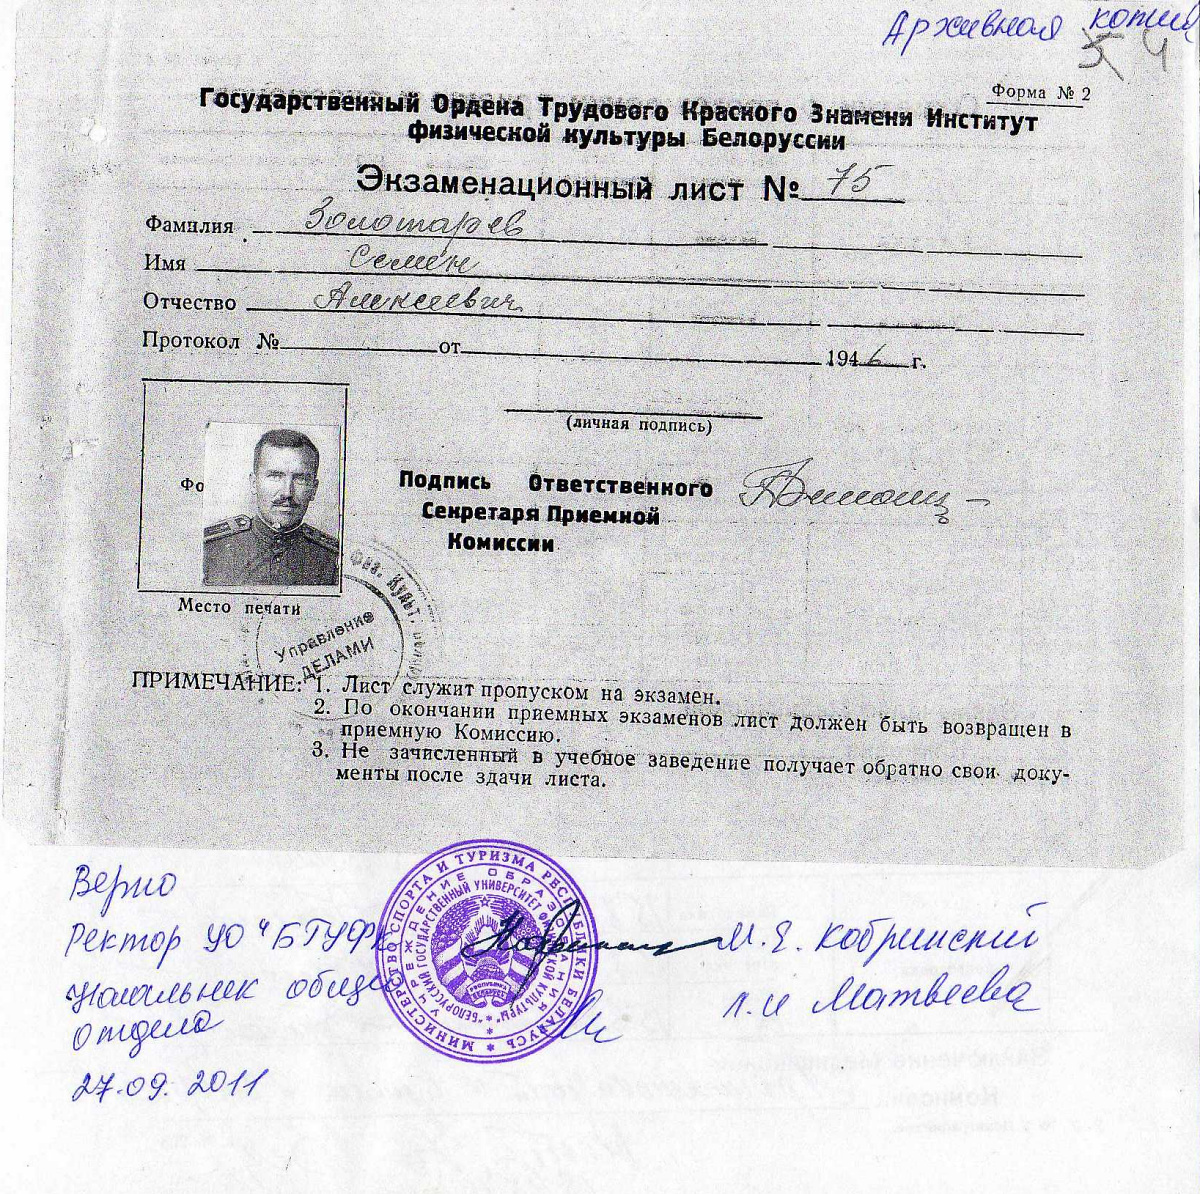 https://dyatlovpass.com/resources/340/gallery/Semyon-Zolotaryov-documents-26.jpg